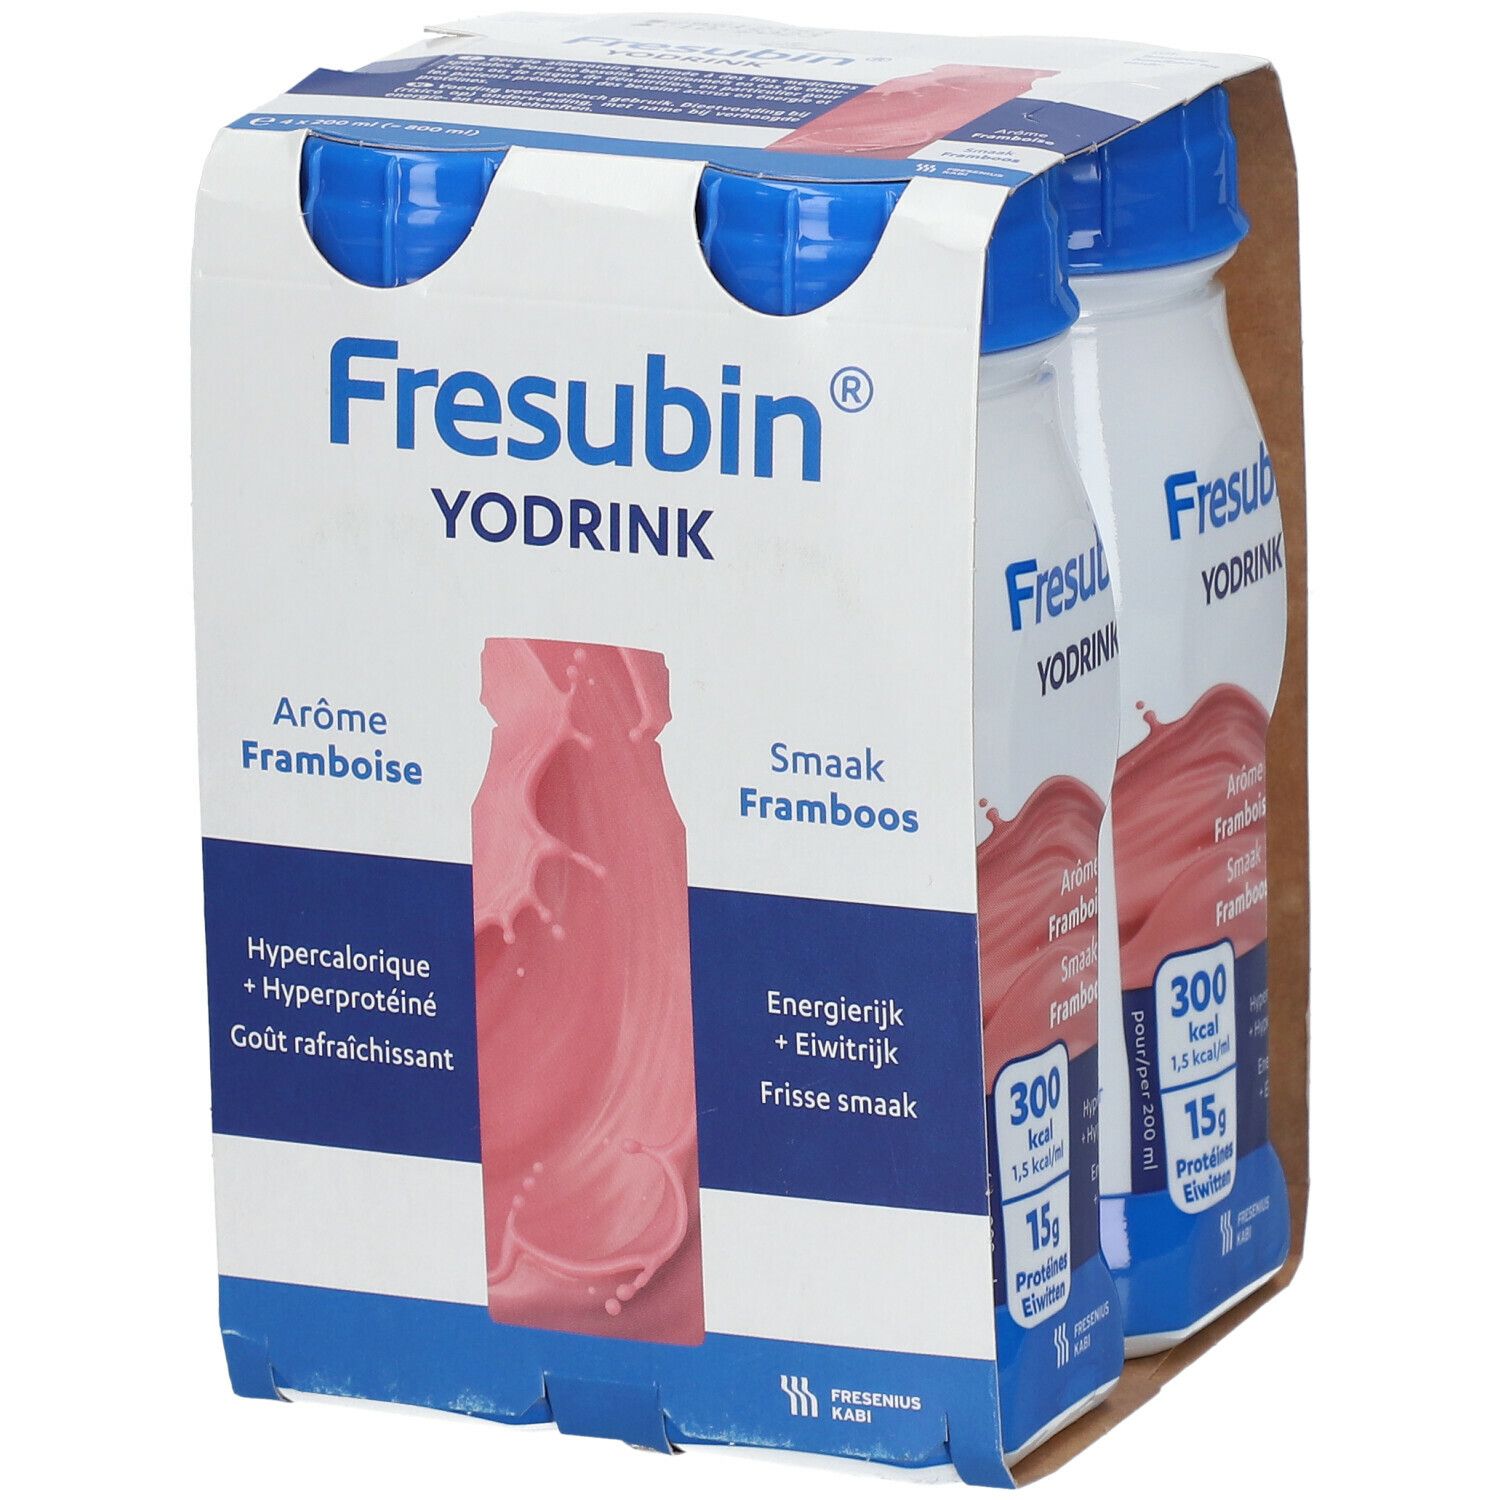 Fresubin® Yodrink Framboise